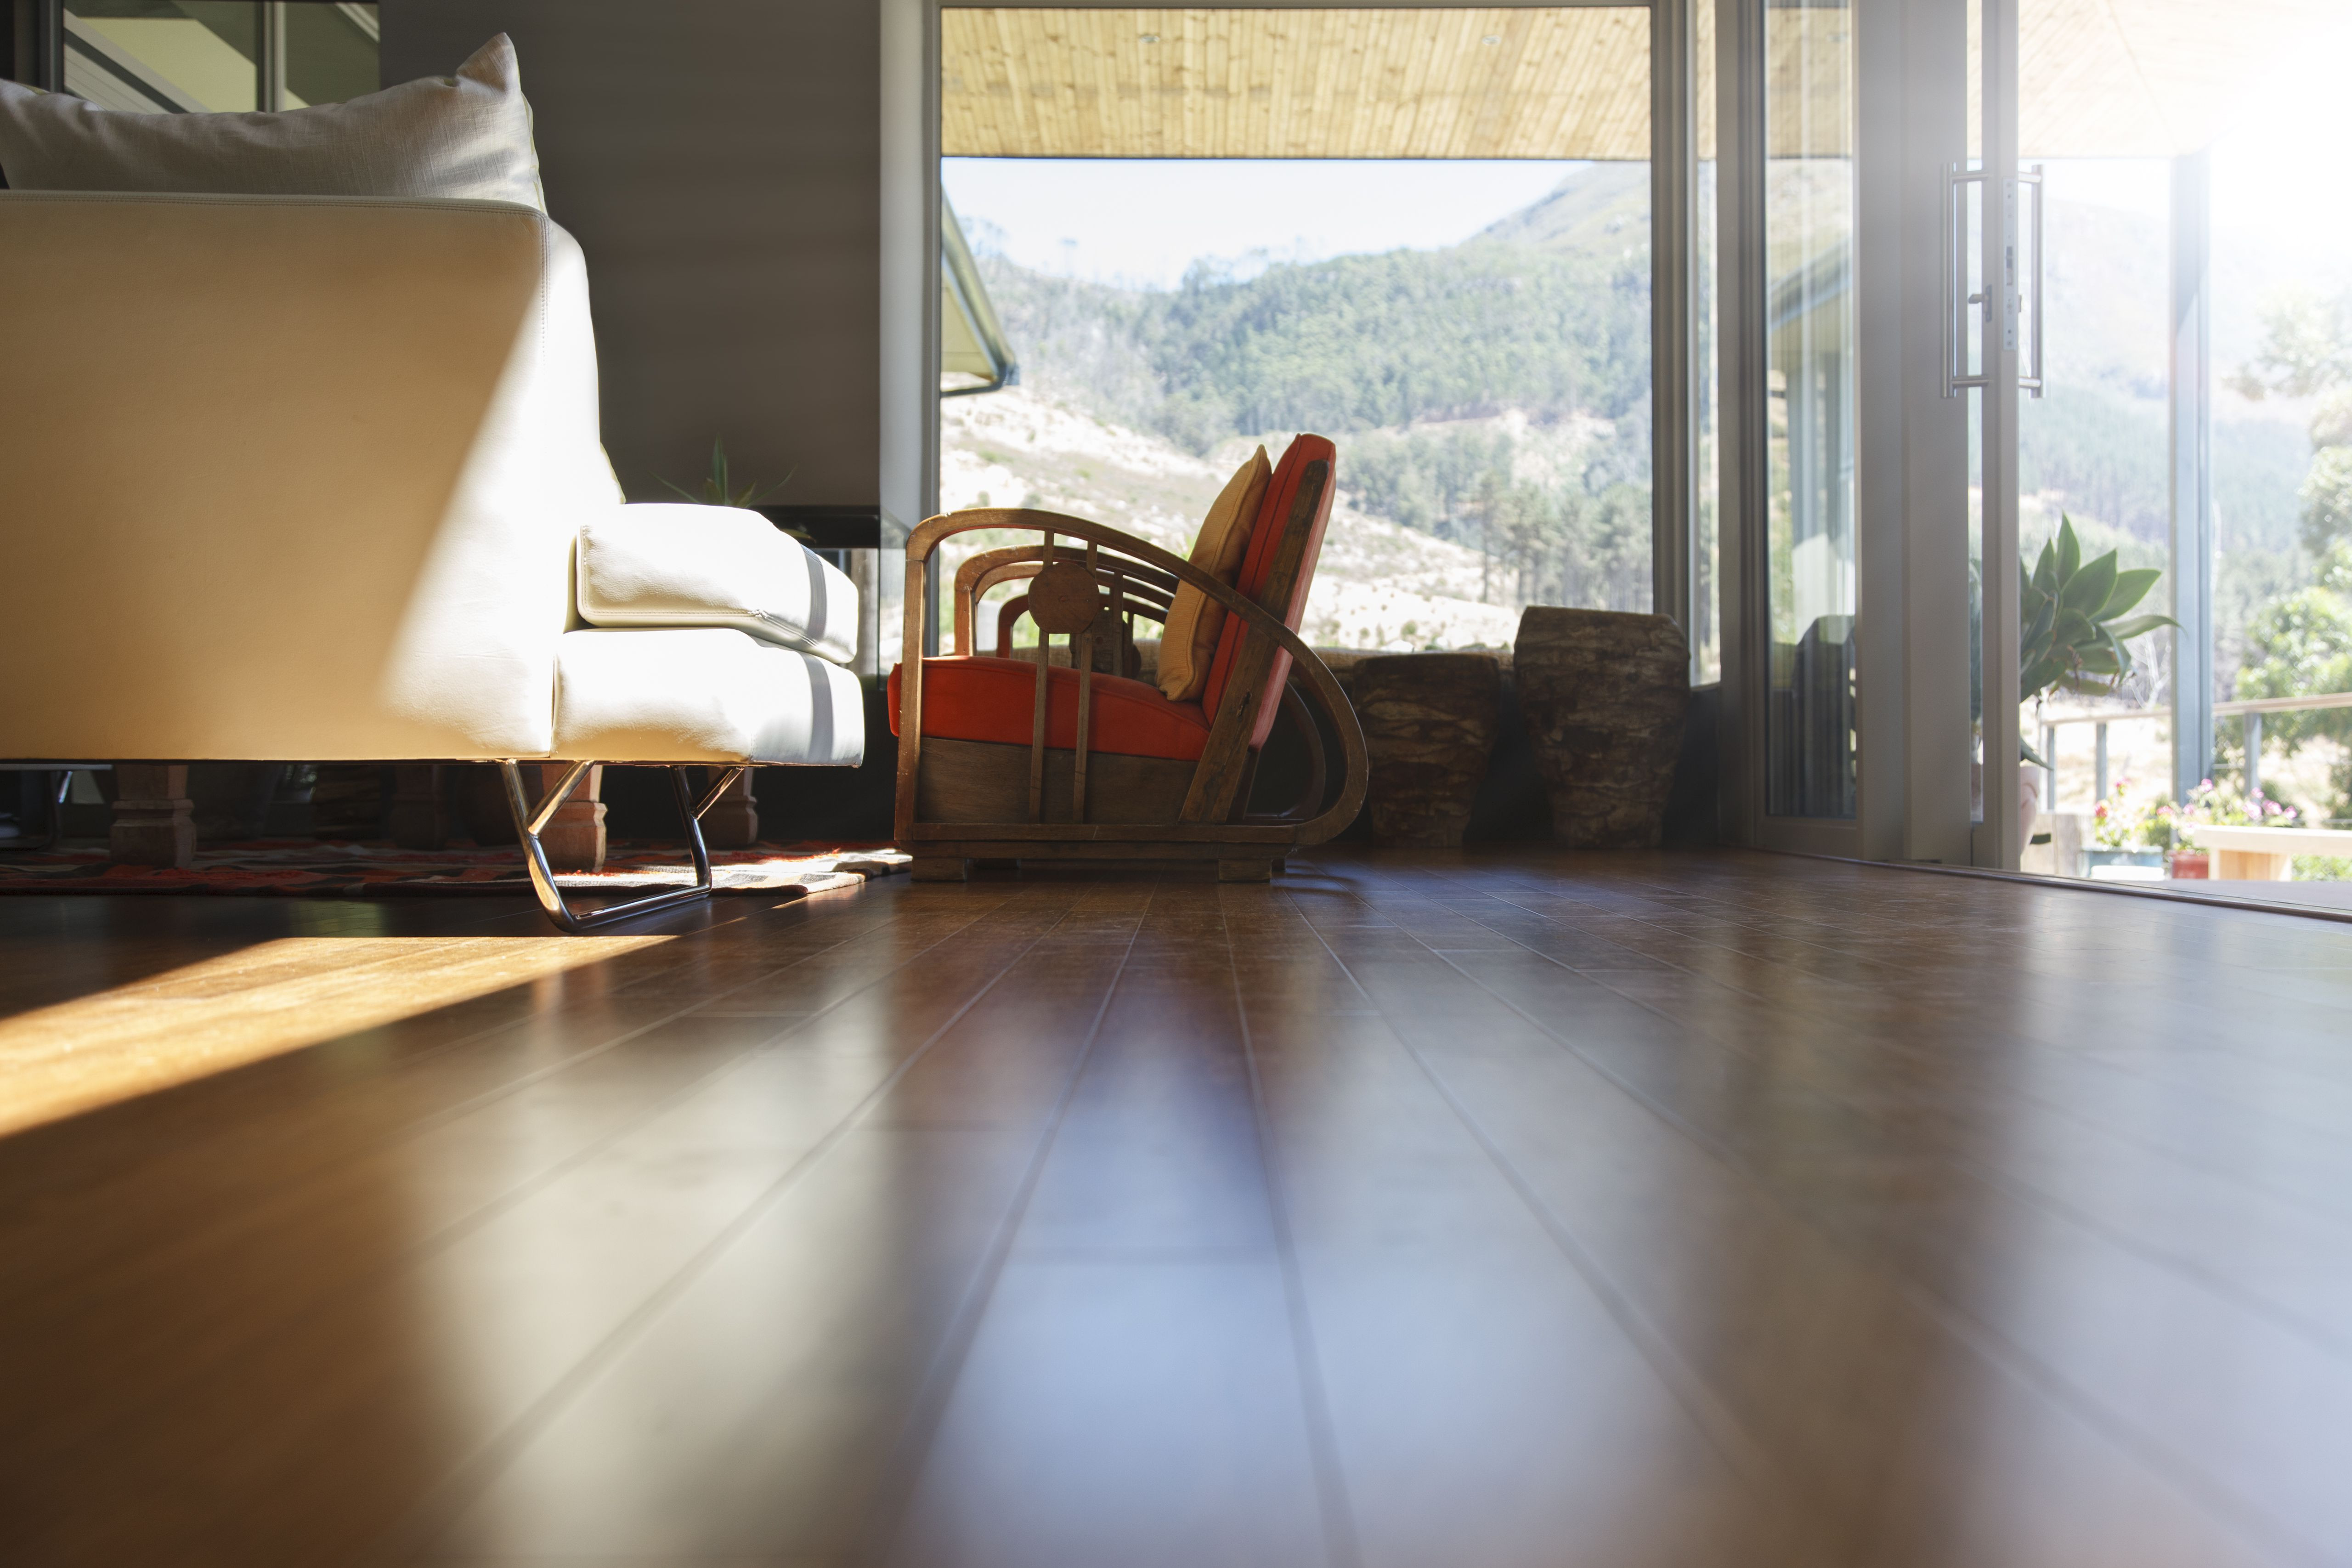 10 Perfect Standard Hardwood Flooring Sizes 2022 free download standard hardwood flooring sizes of a vinyl plank flooring guide inside living room interior hard wood floor and sofa 525439899 57e95e215f9b586c359d5ab1